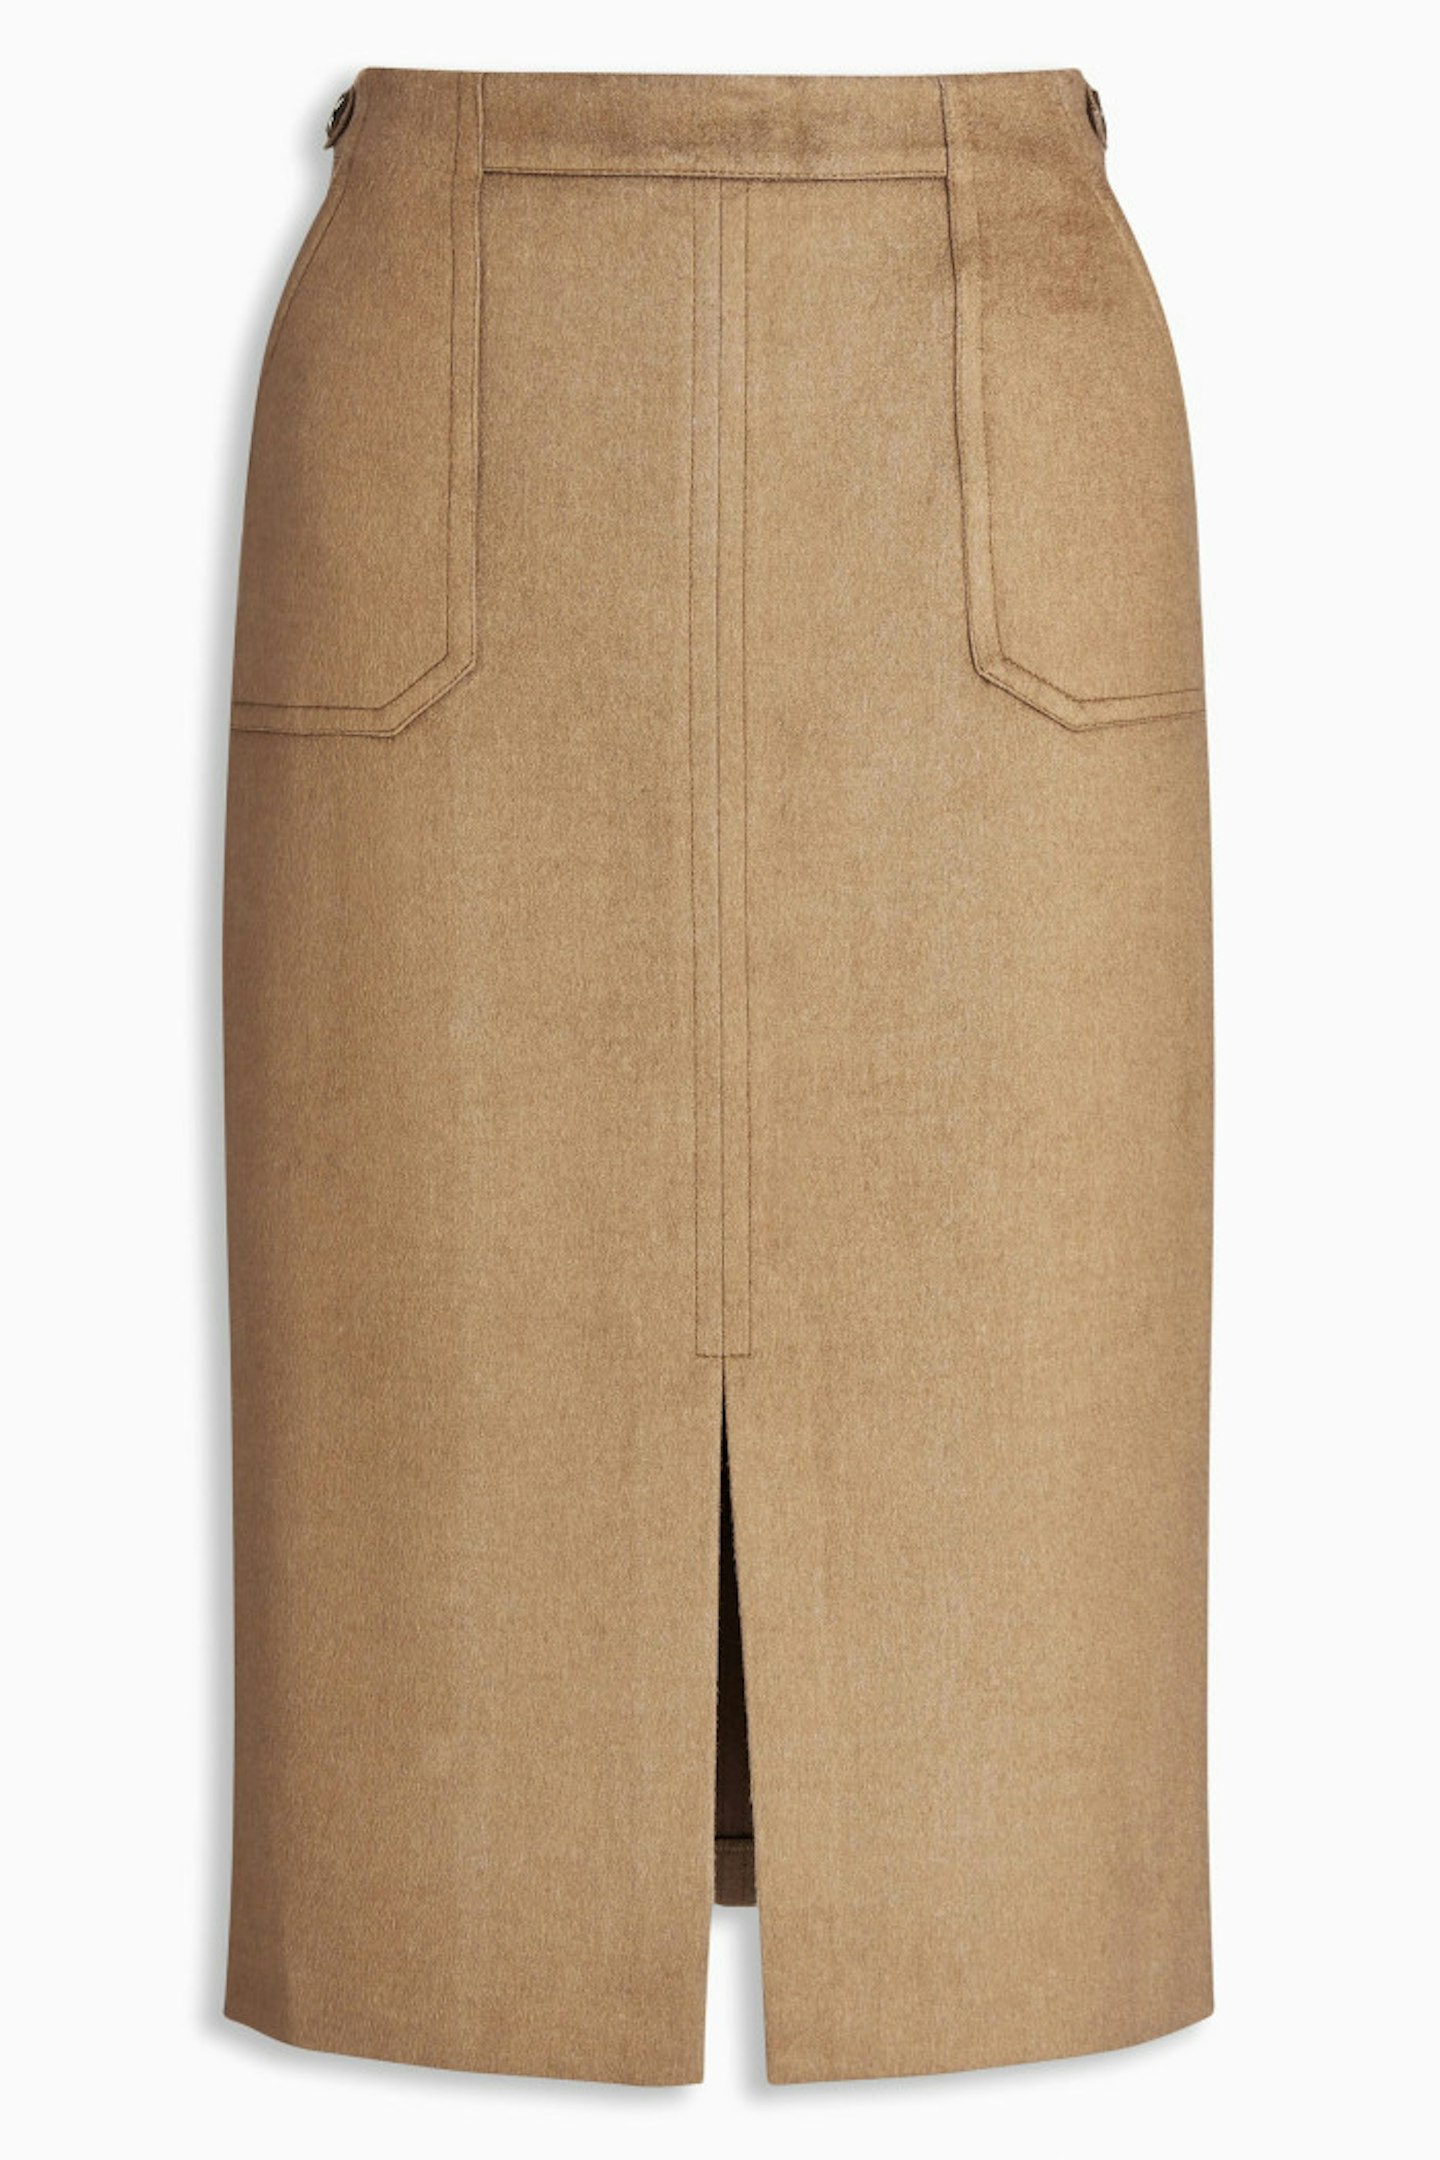 Next Camel Pencil Skirt, £40.00